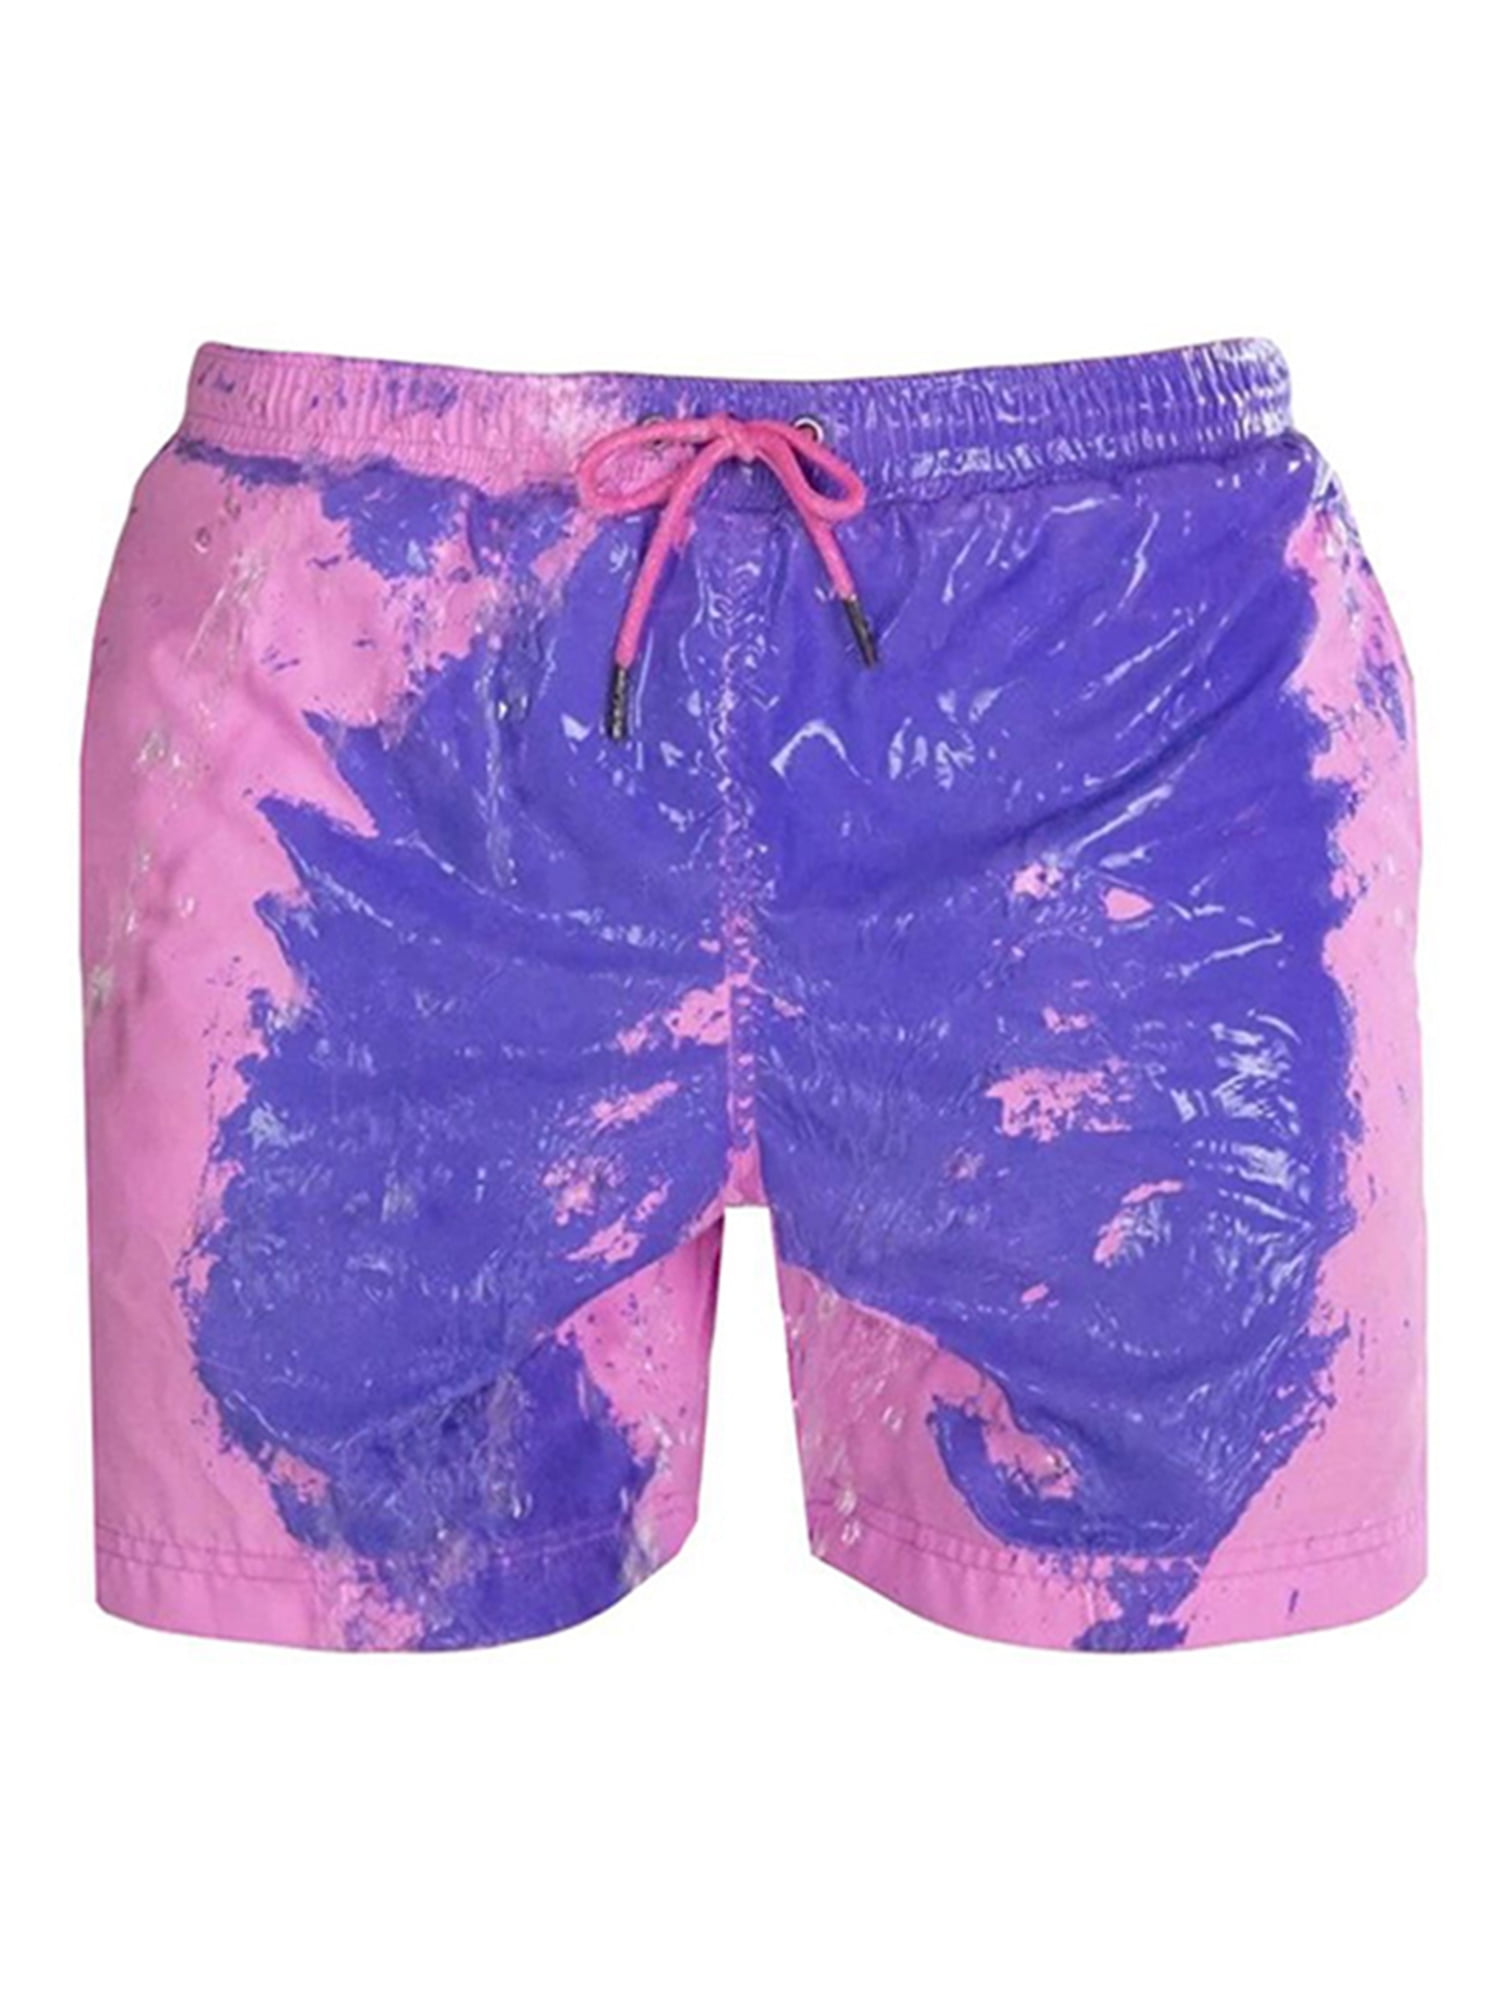 CENHOME Women Swim Trunks Pink Blue Purple Beach Board Shorts